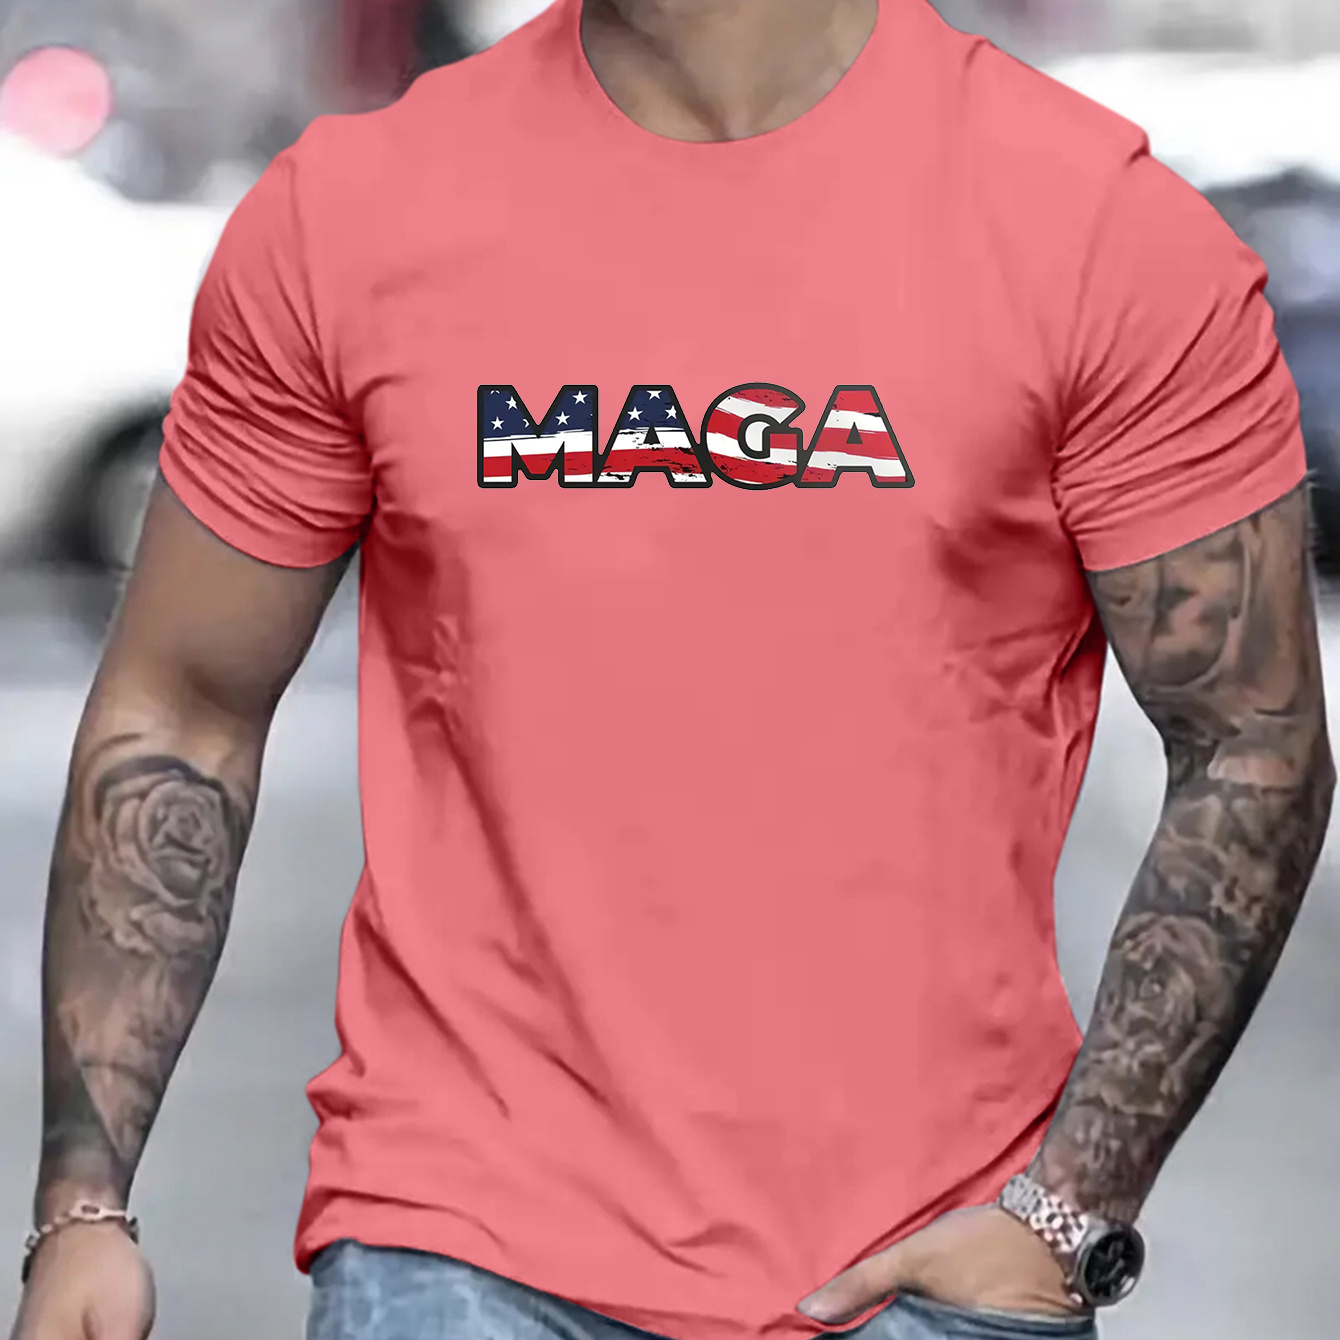 

Maga Letter Print Men's Short Sleeve Crew Neck T-shirts, Comfy Breathable Casual Elastic Tops, Men's Clothing